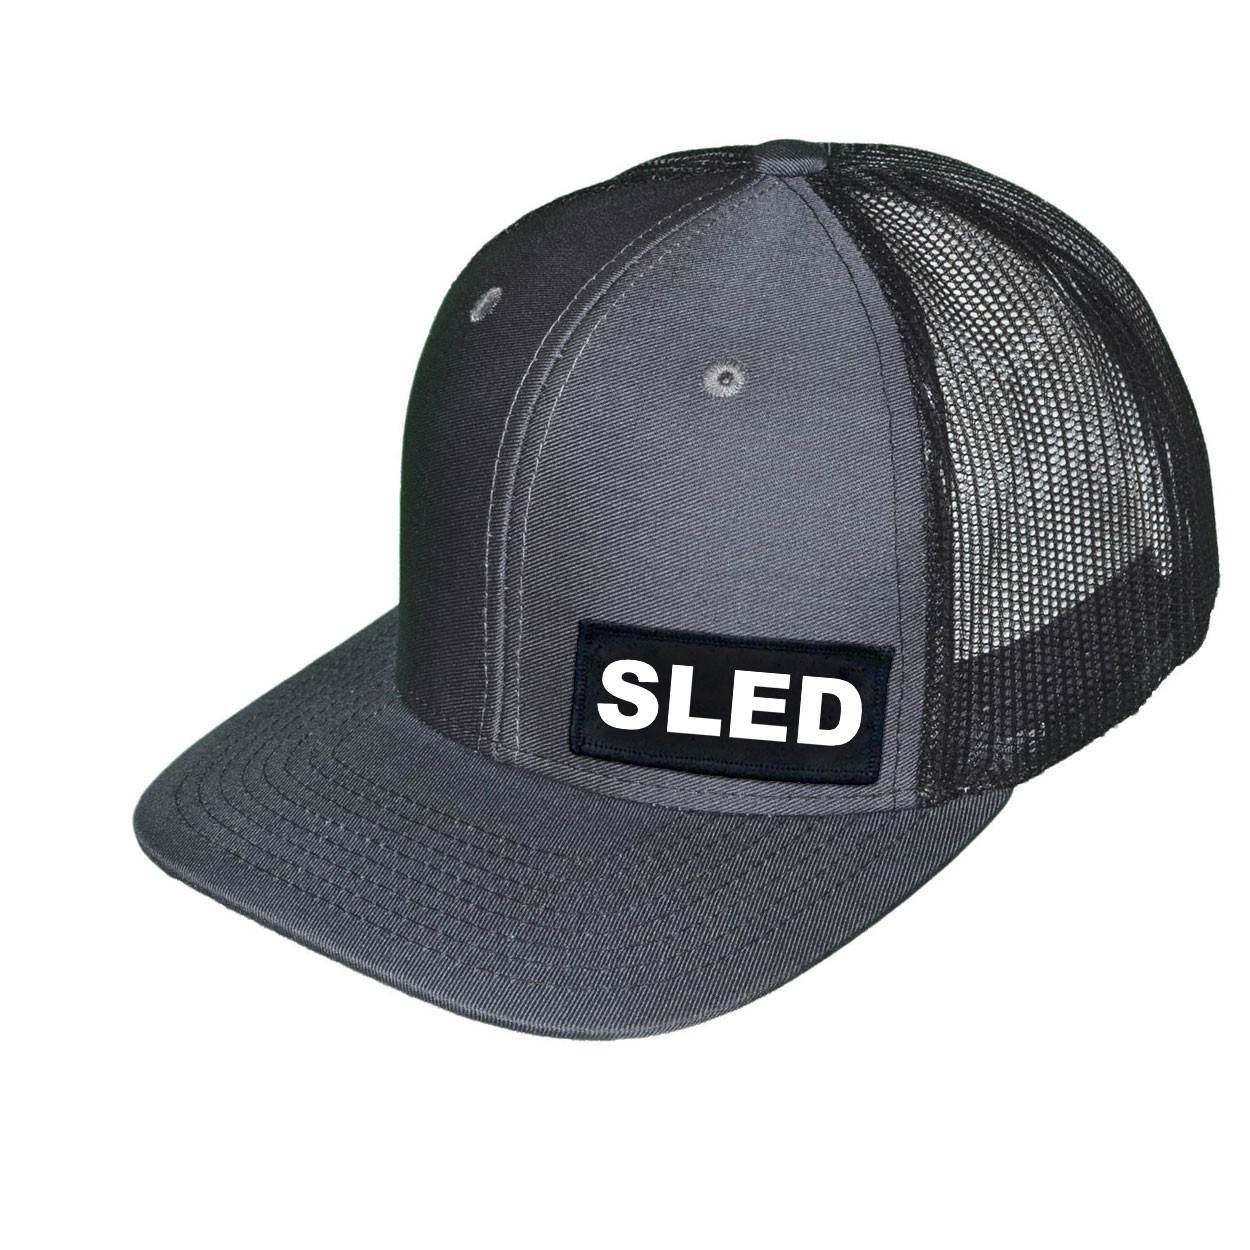 Sled Brand Logo Night Out Woven Patch Snapback Trucker Hat Dark Gray/Black